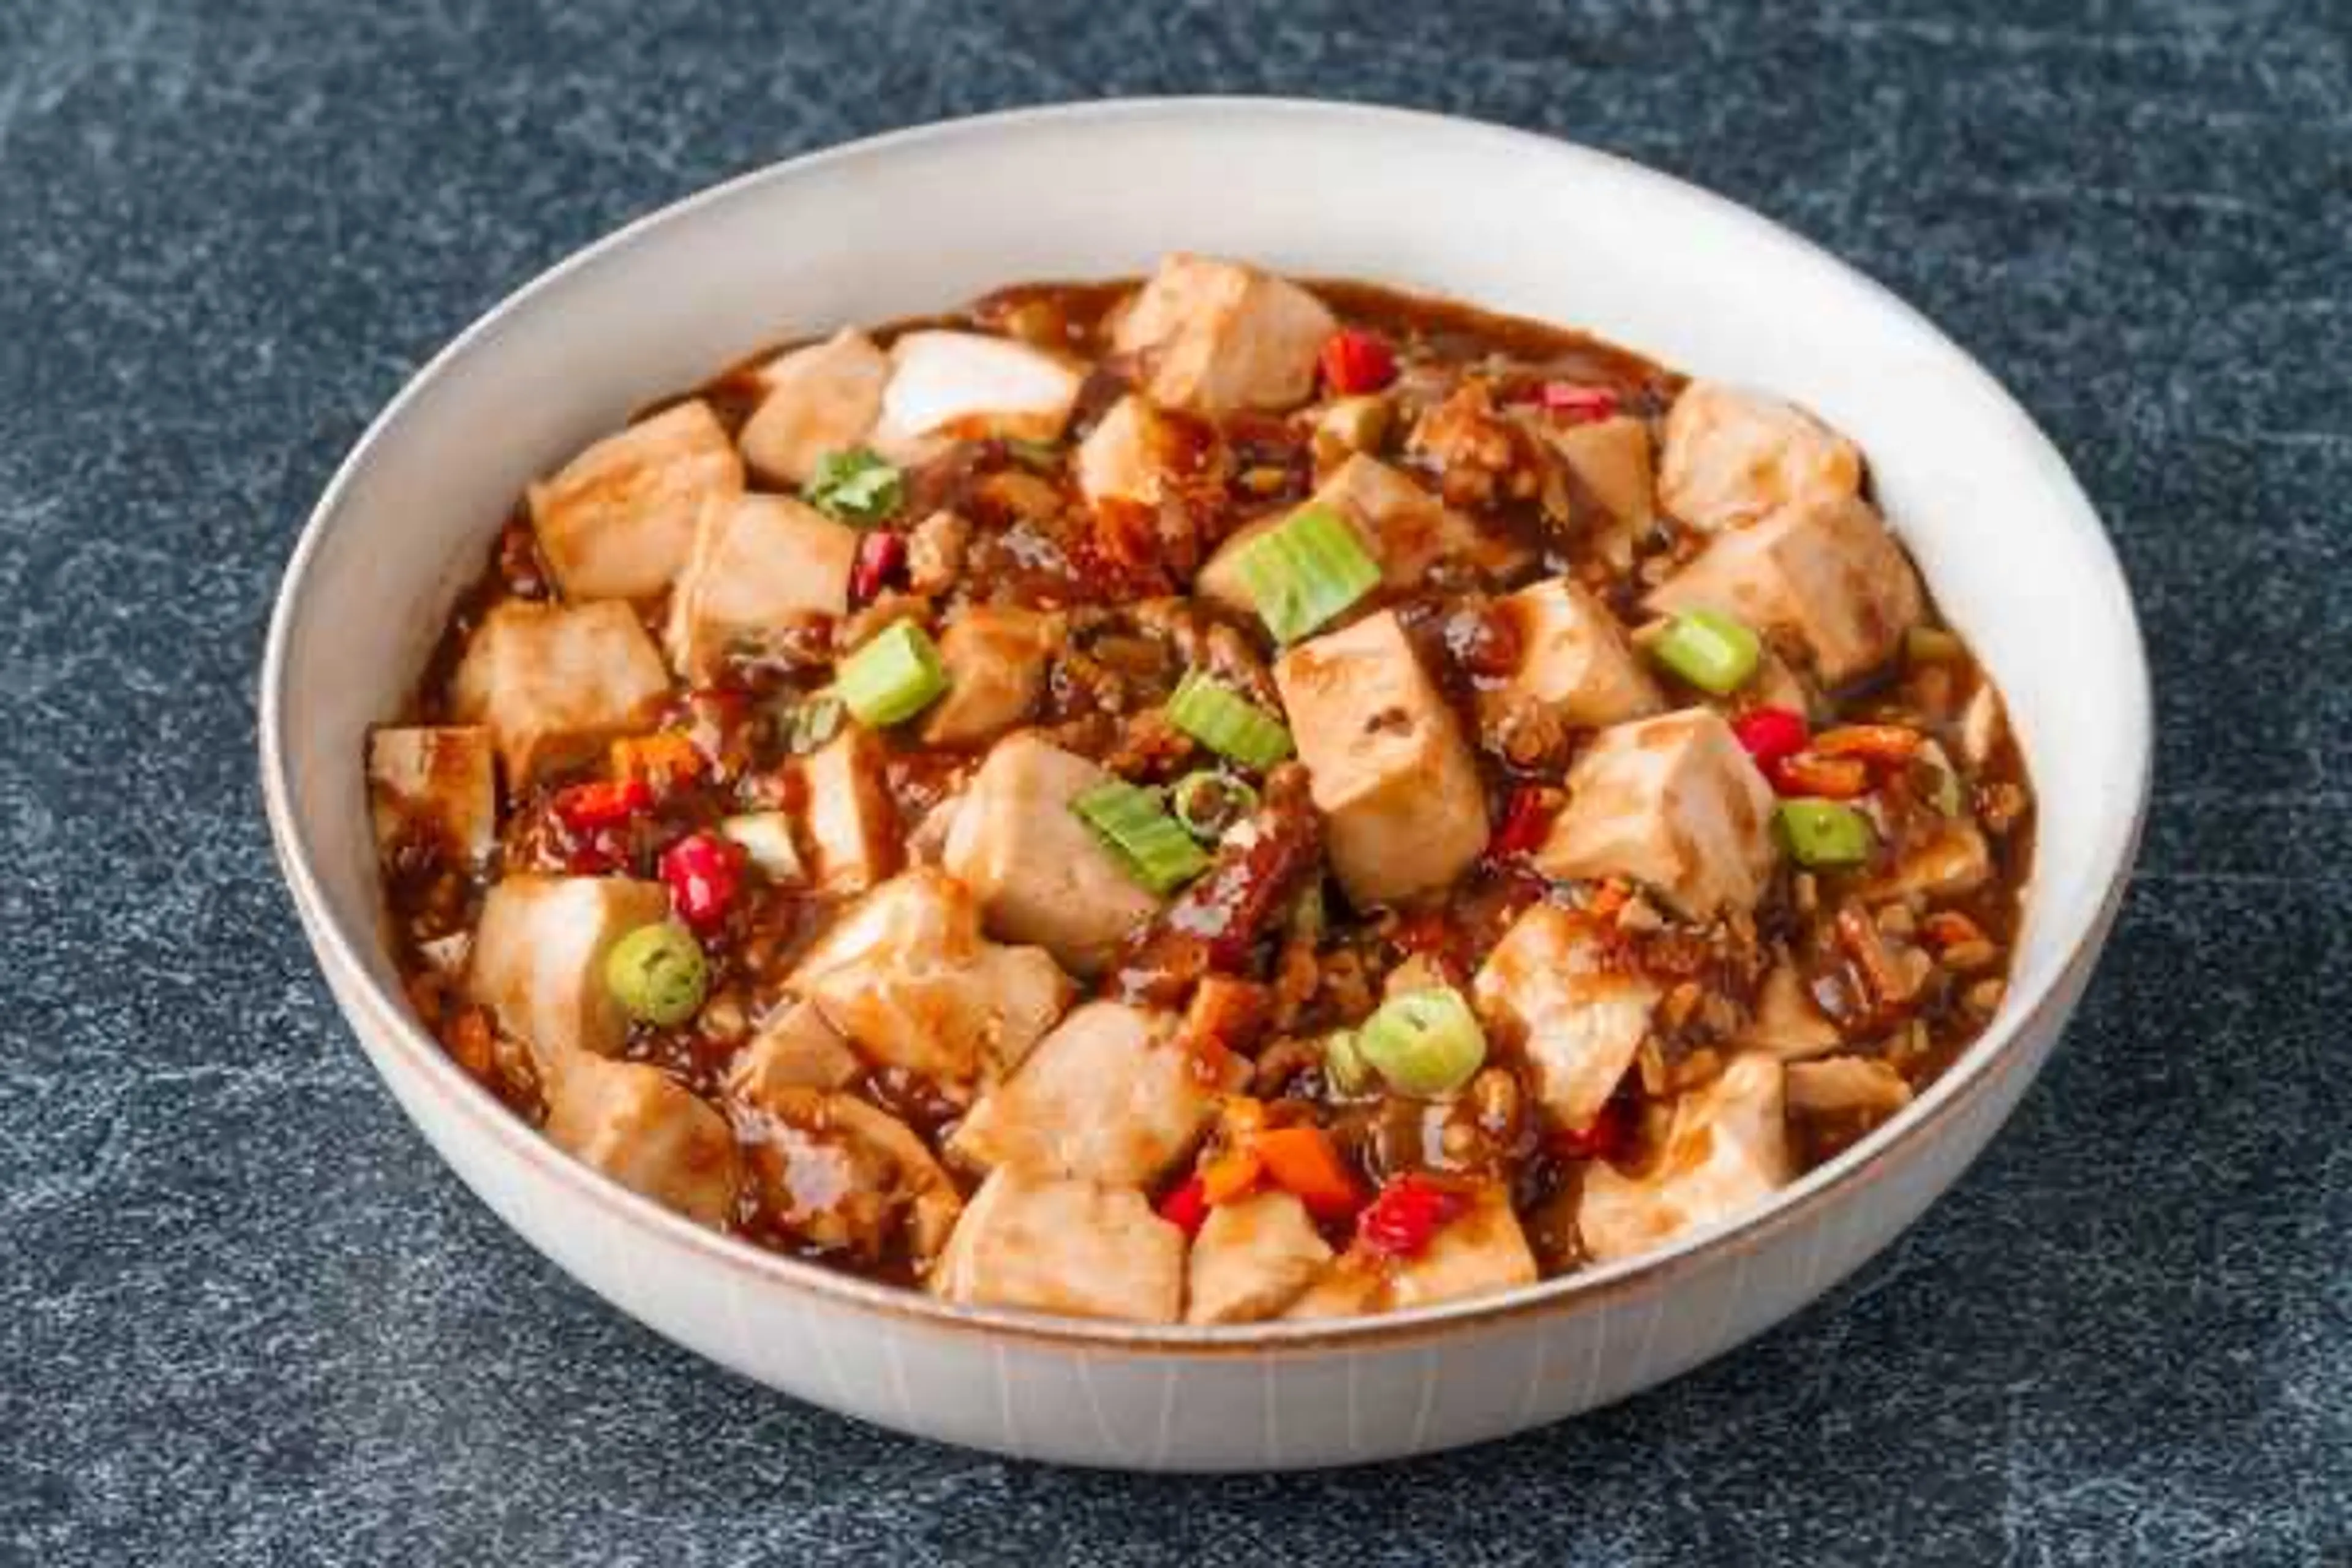 Mapo Tofu with Pork (麻婆豆腐)